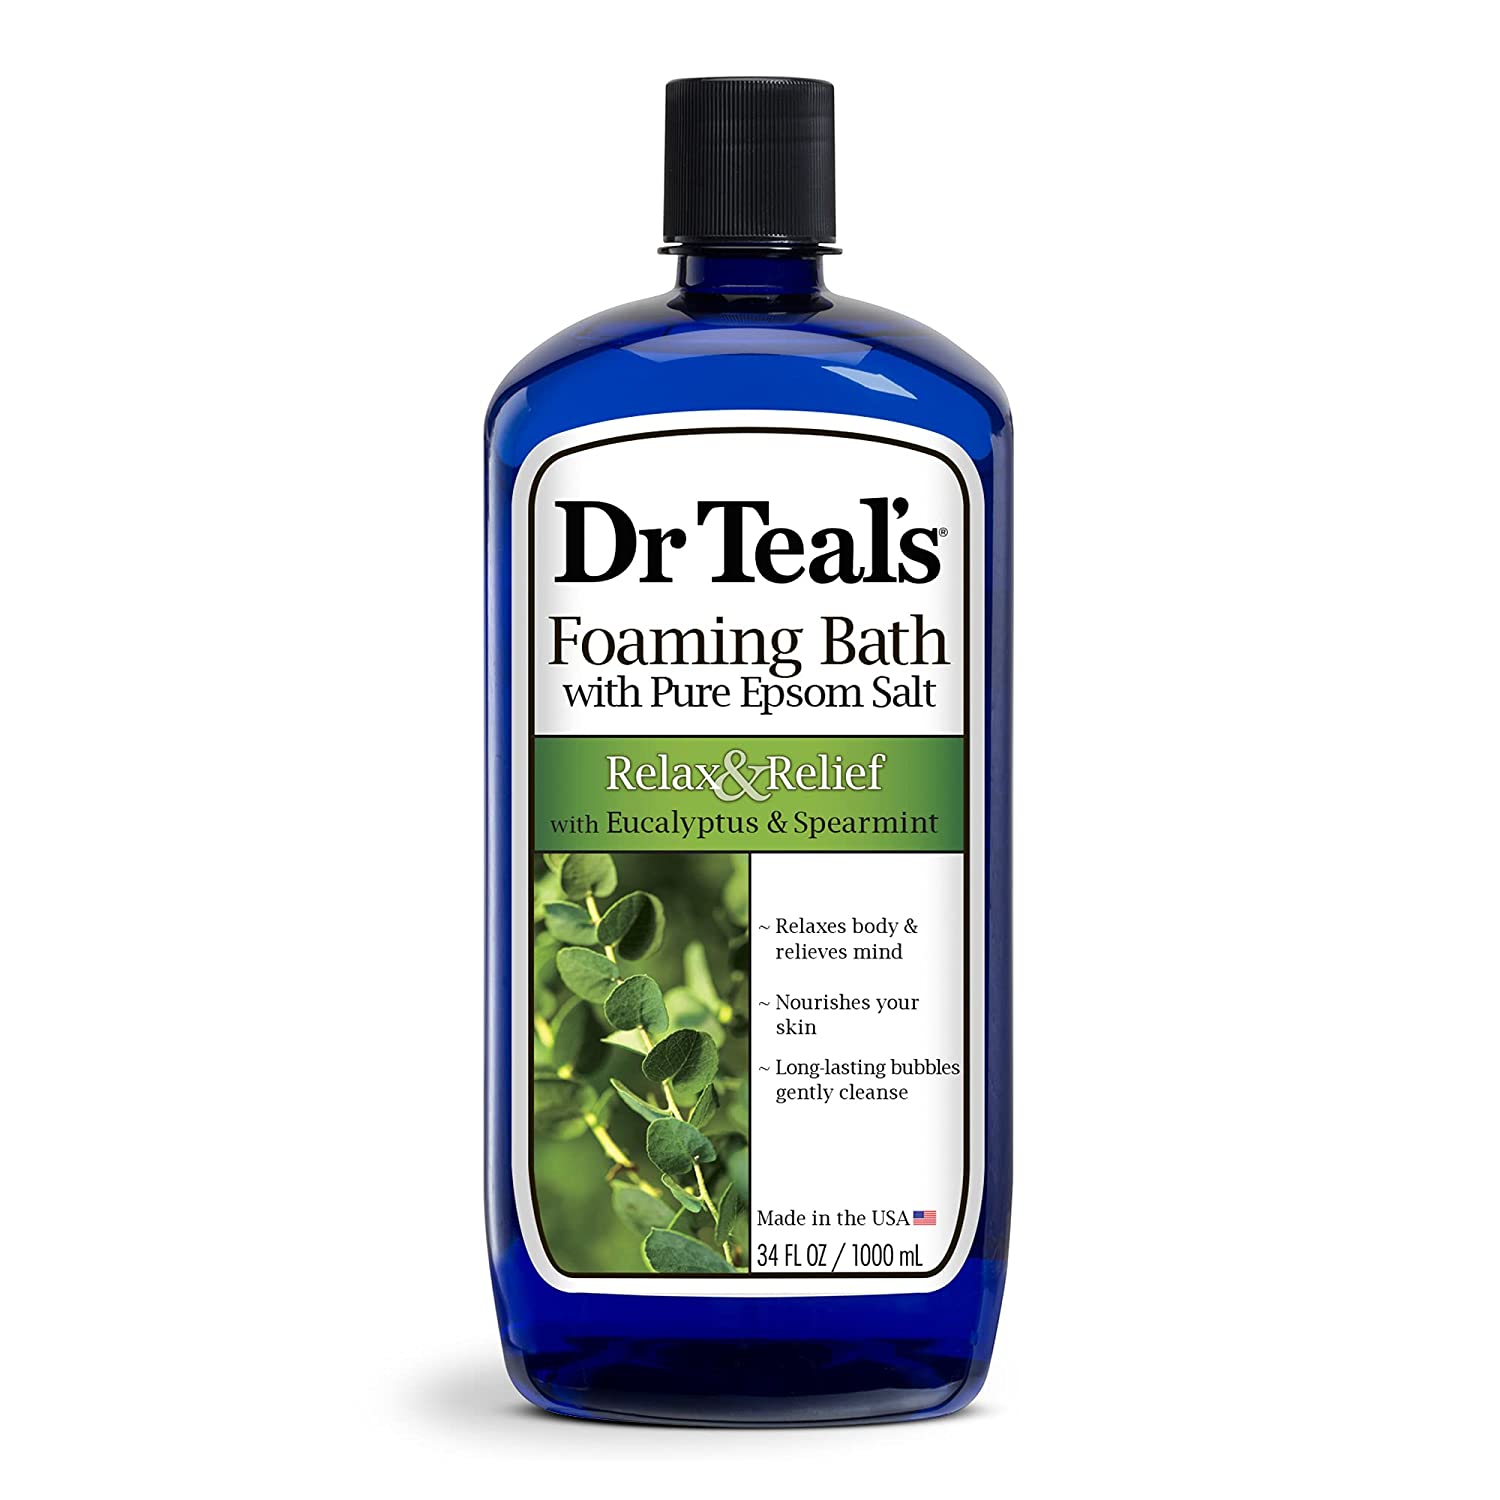 34-Oz Dr Teal's Foaming Bath w/ Pure Epsom Salt (Eucalyptus Spearmint) $3.67 w/ S&S + Free Shipping w/ Prime or $25+